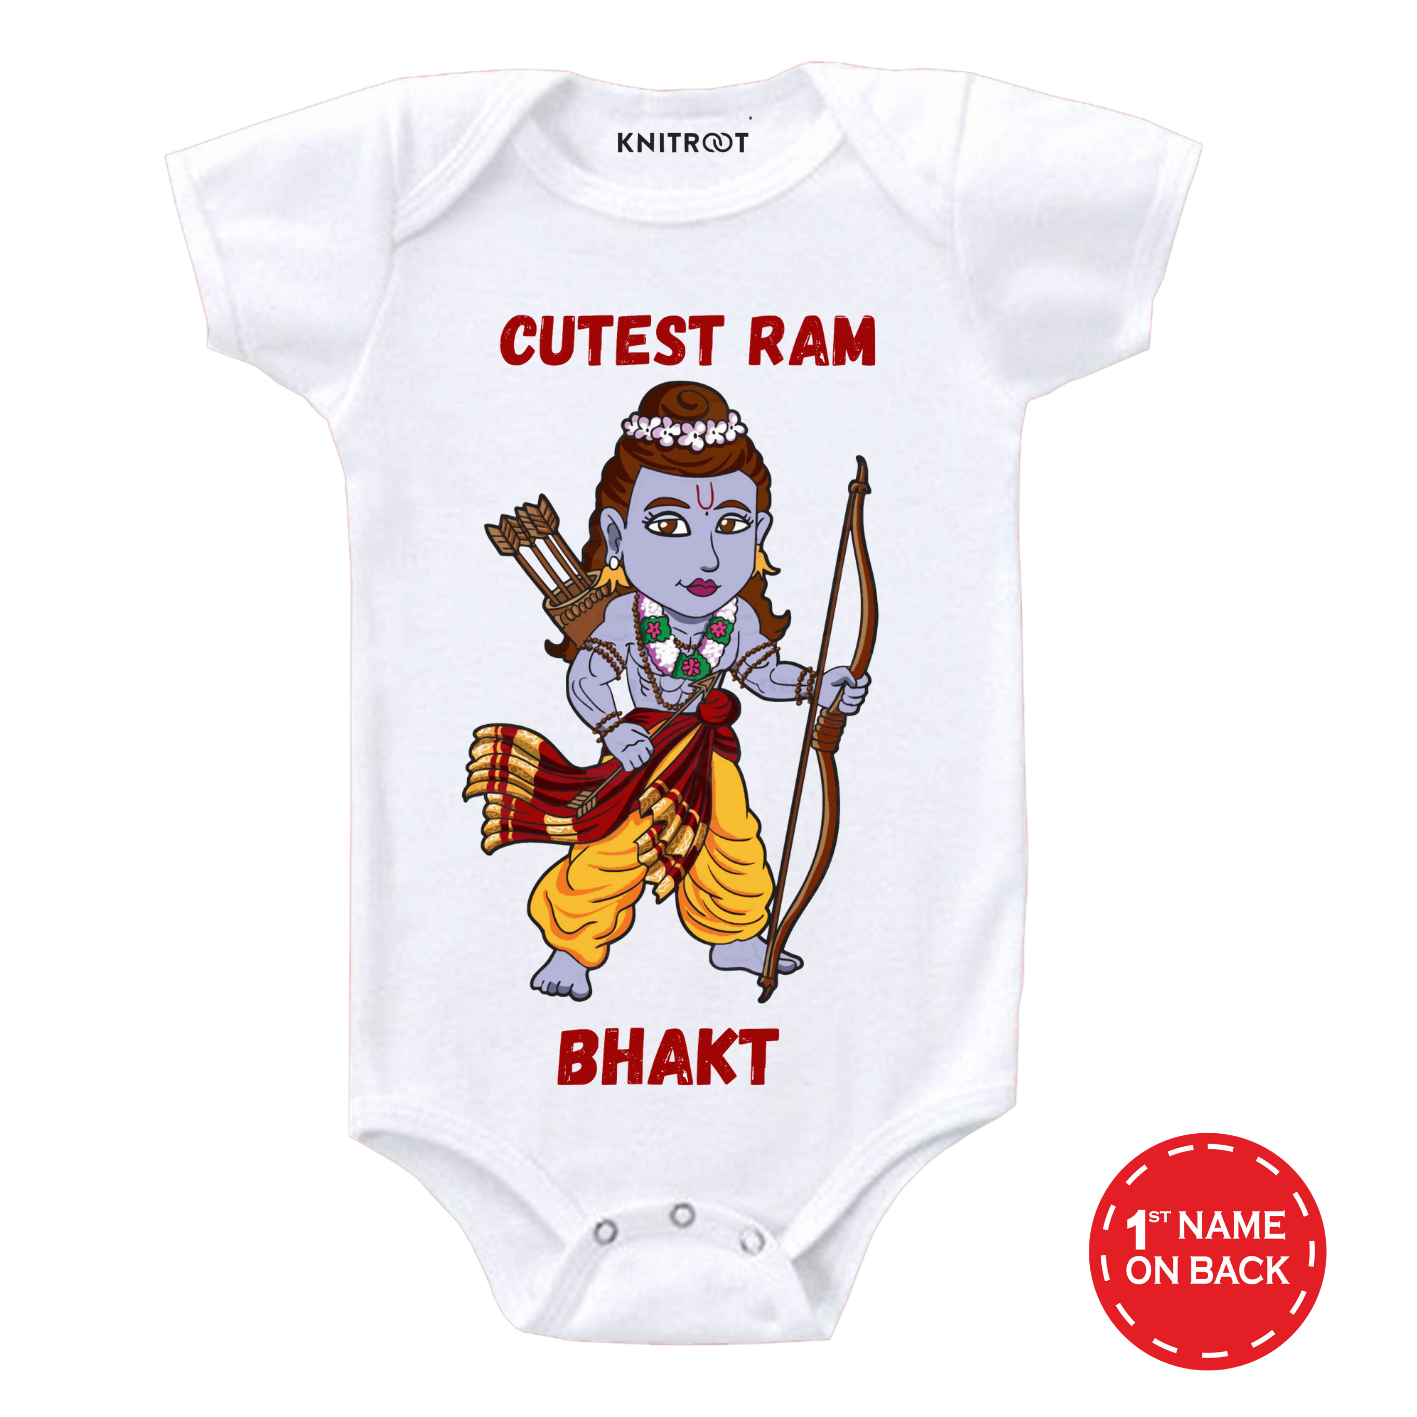 Cutest Ram Bhakt (Ram)